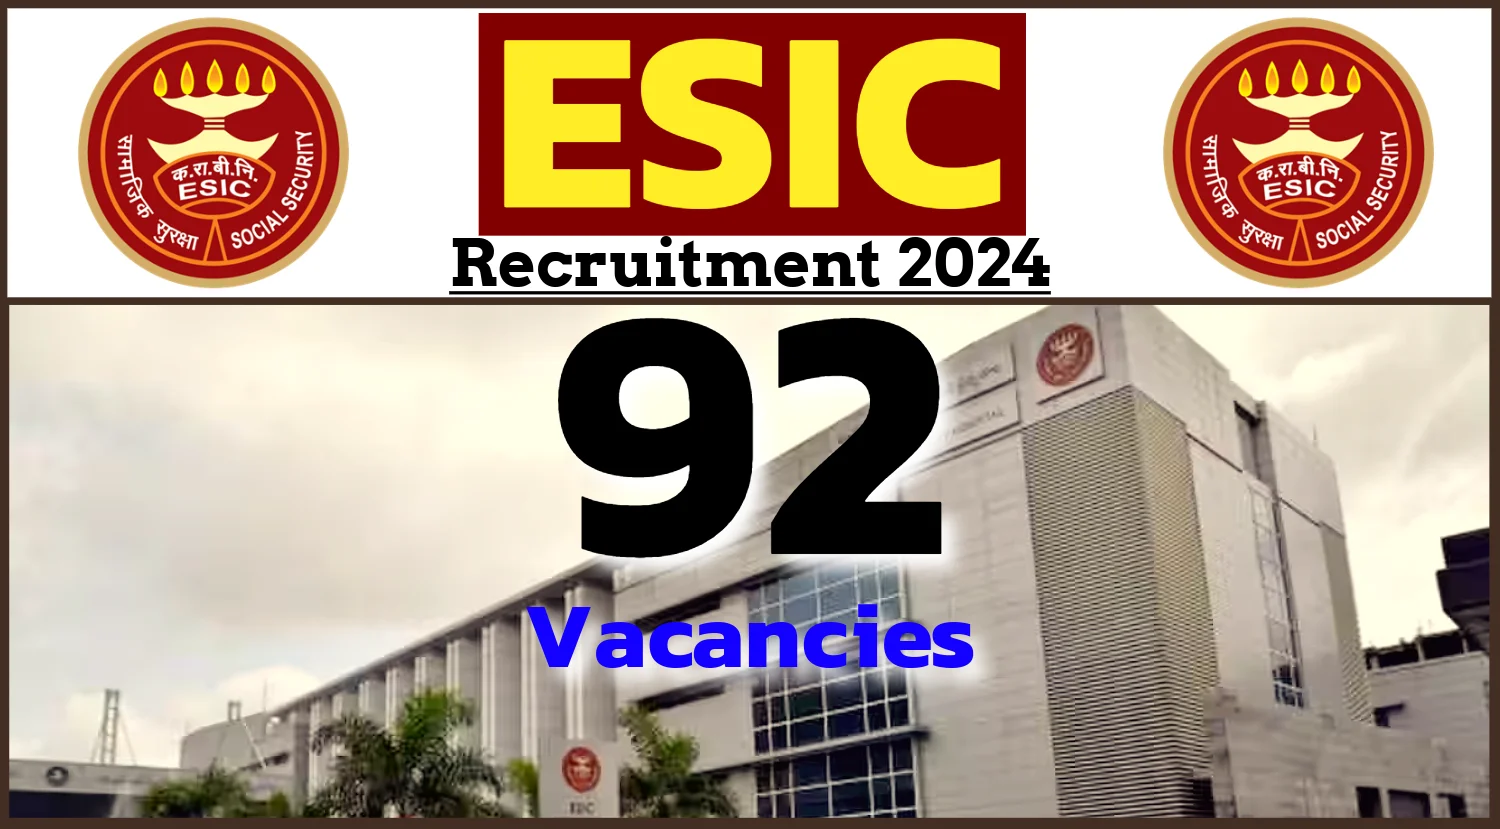 ESIC Recruitment 2024 for 92 Vacancies